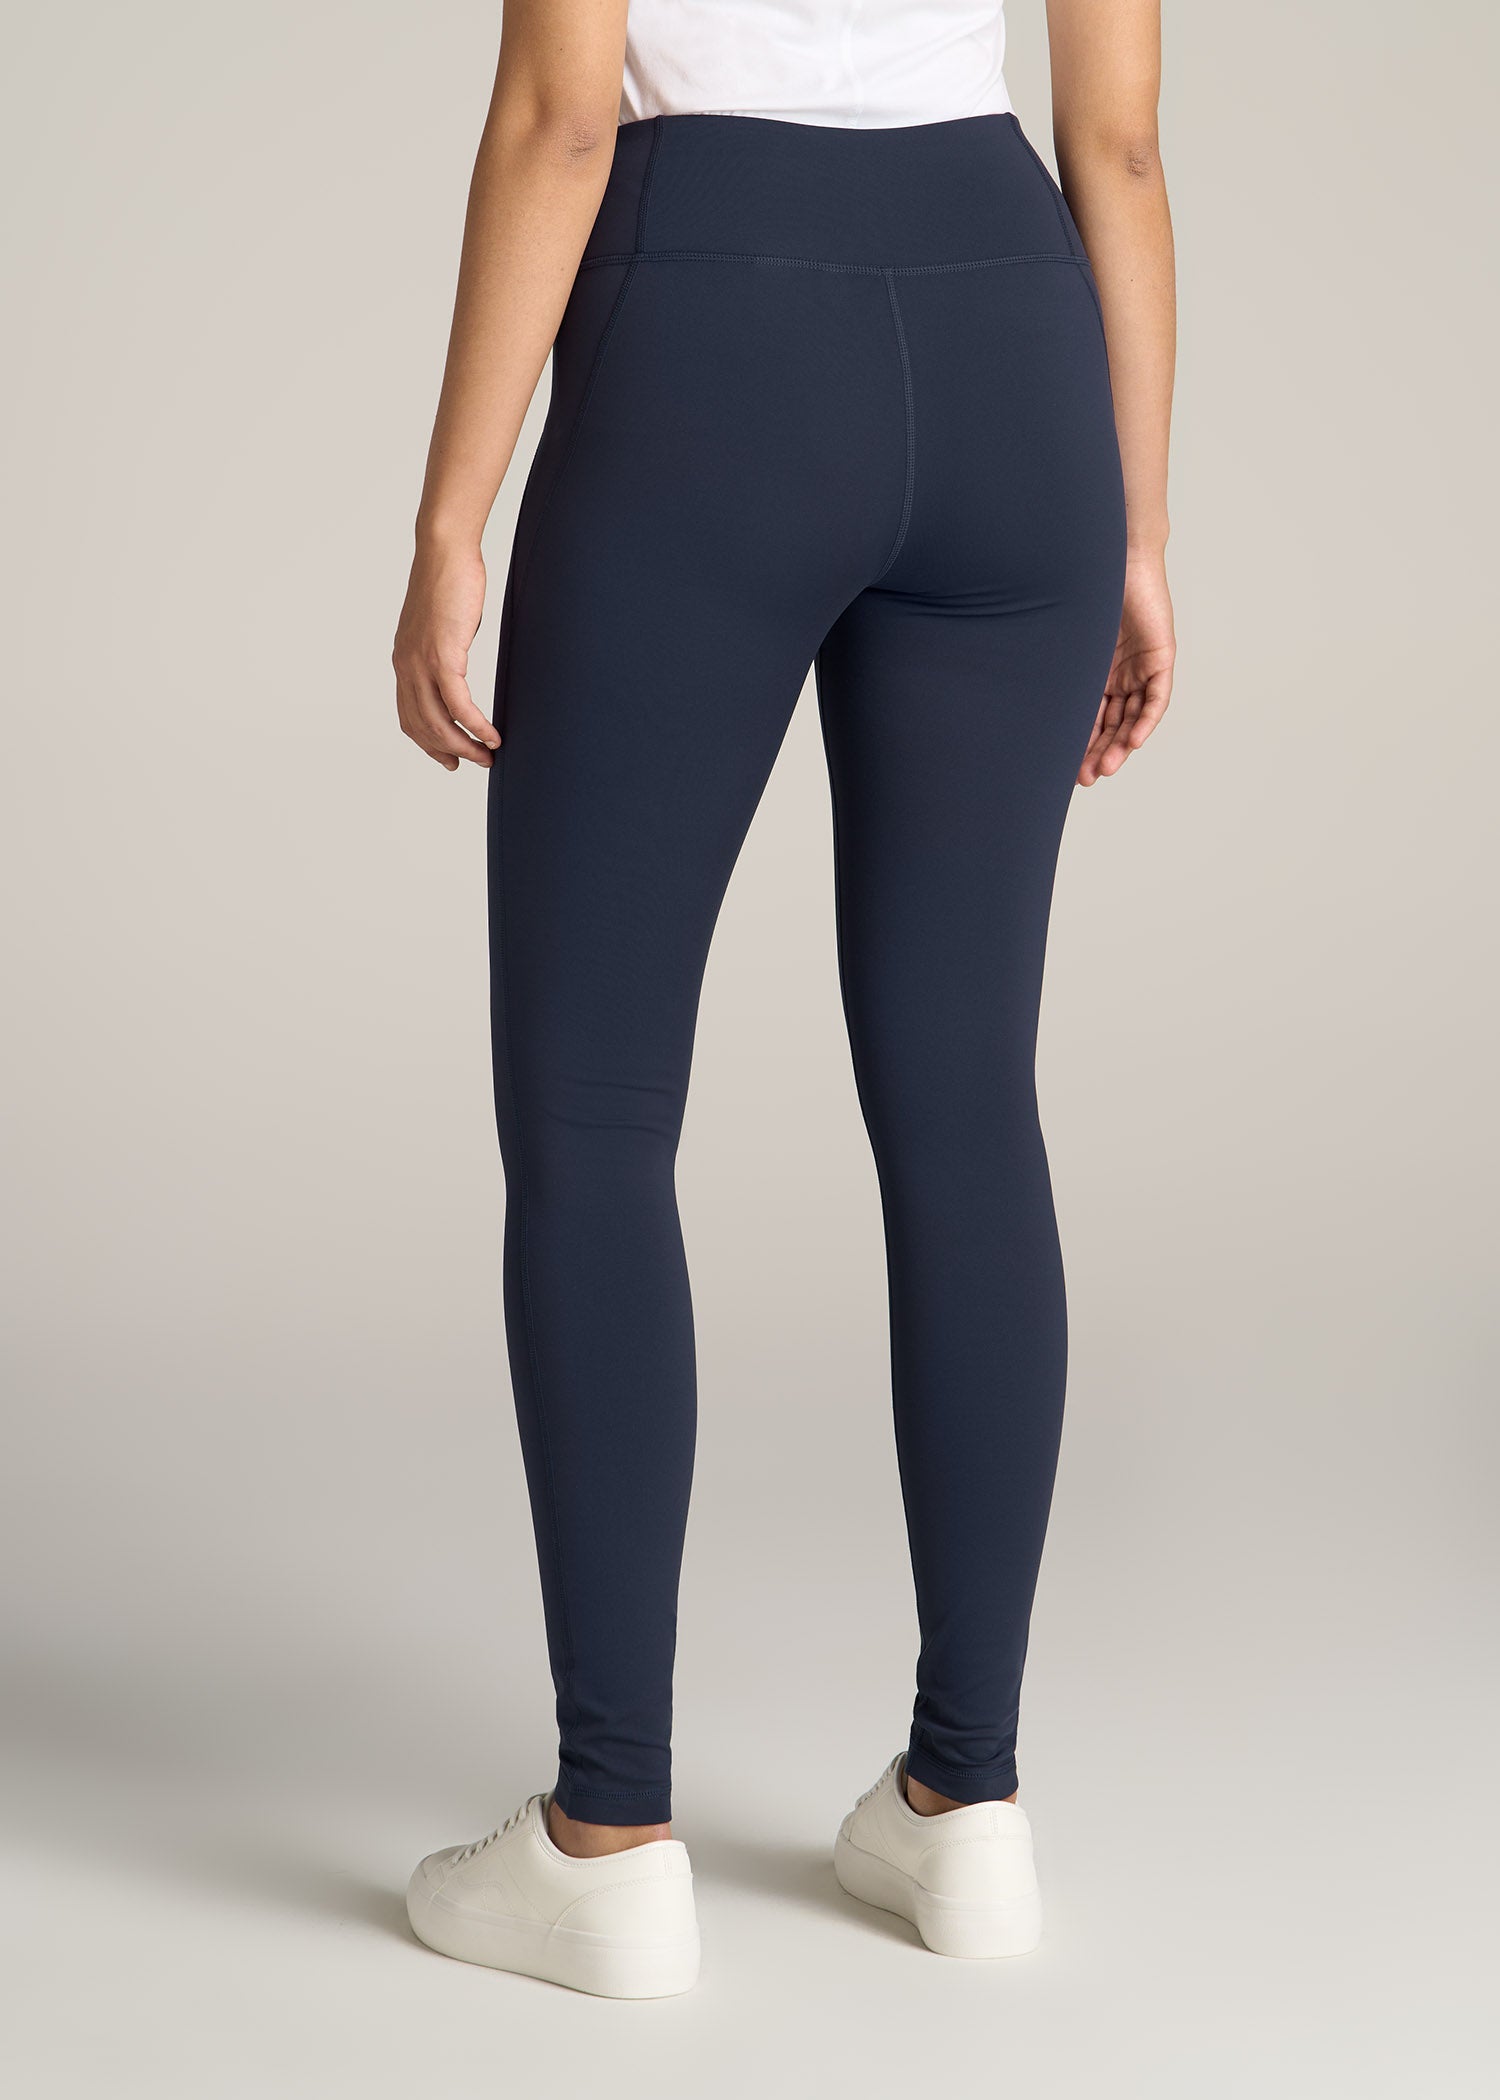 Women's Fleece Pants Tights Leggings Lined High Waist Tights Casual /sporty  Xs-xxl